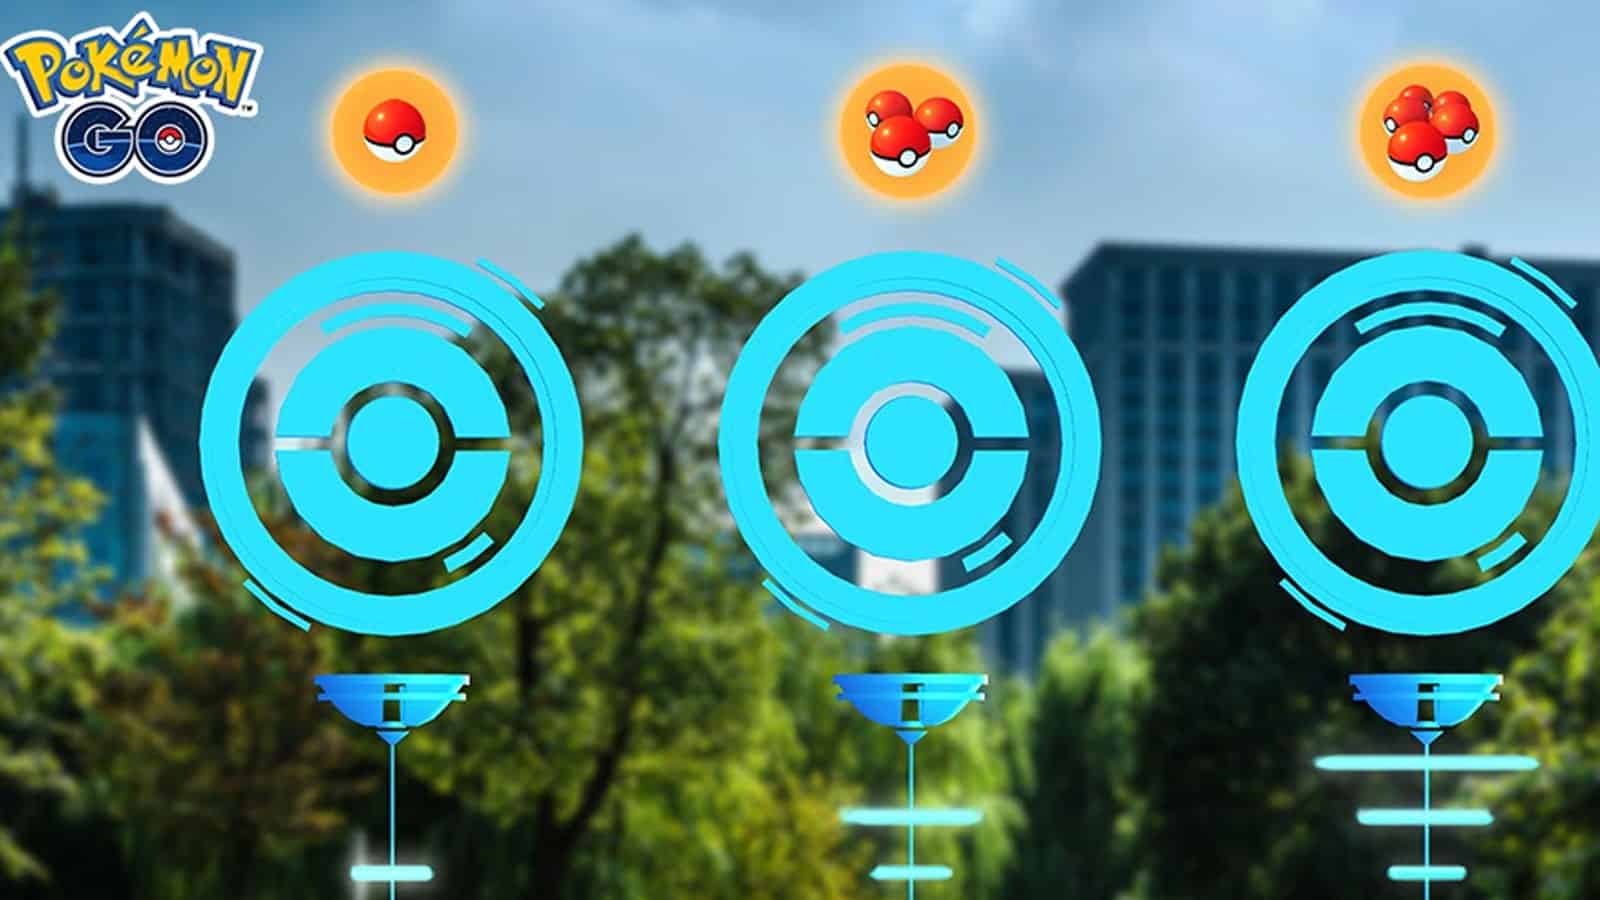 Pokemon Go PokeStop screenshot wallpaper.